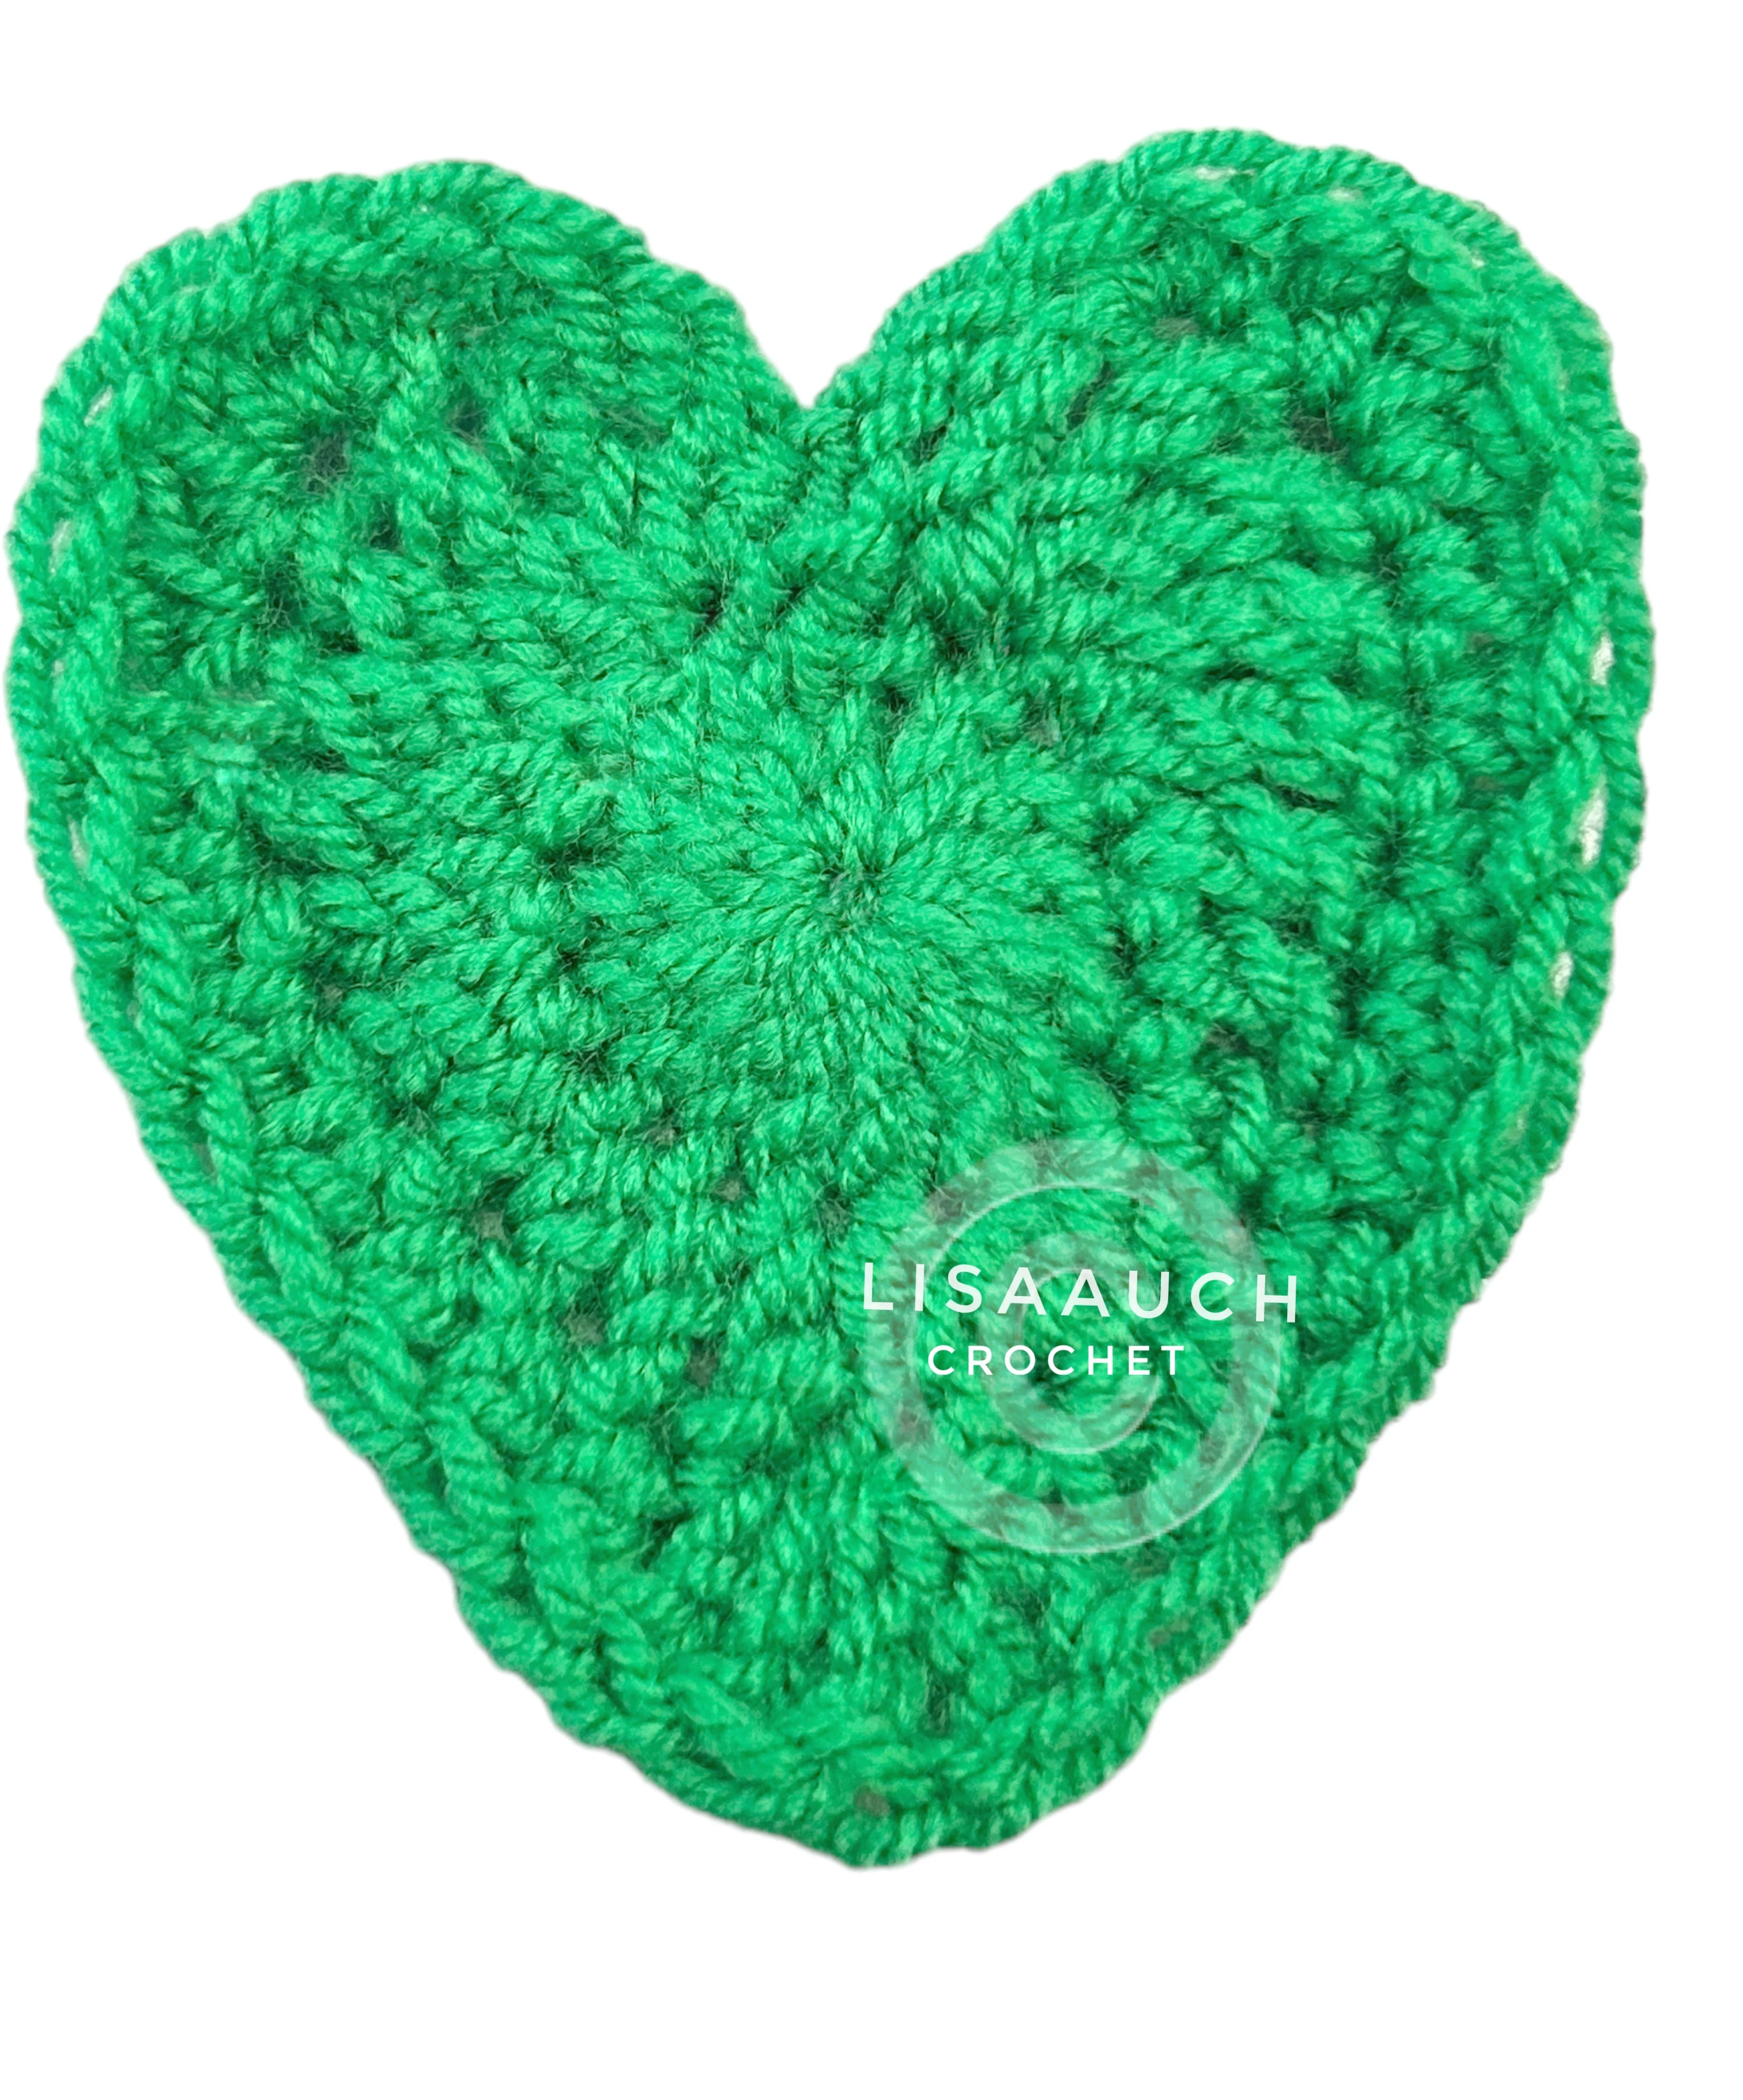 Crochet Leaf Patterns FREE